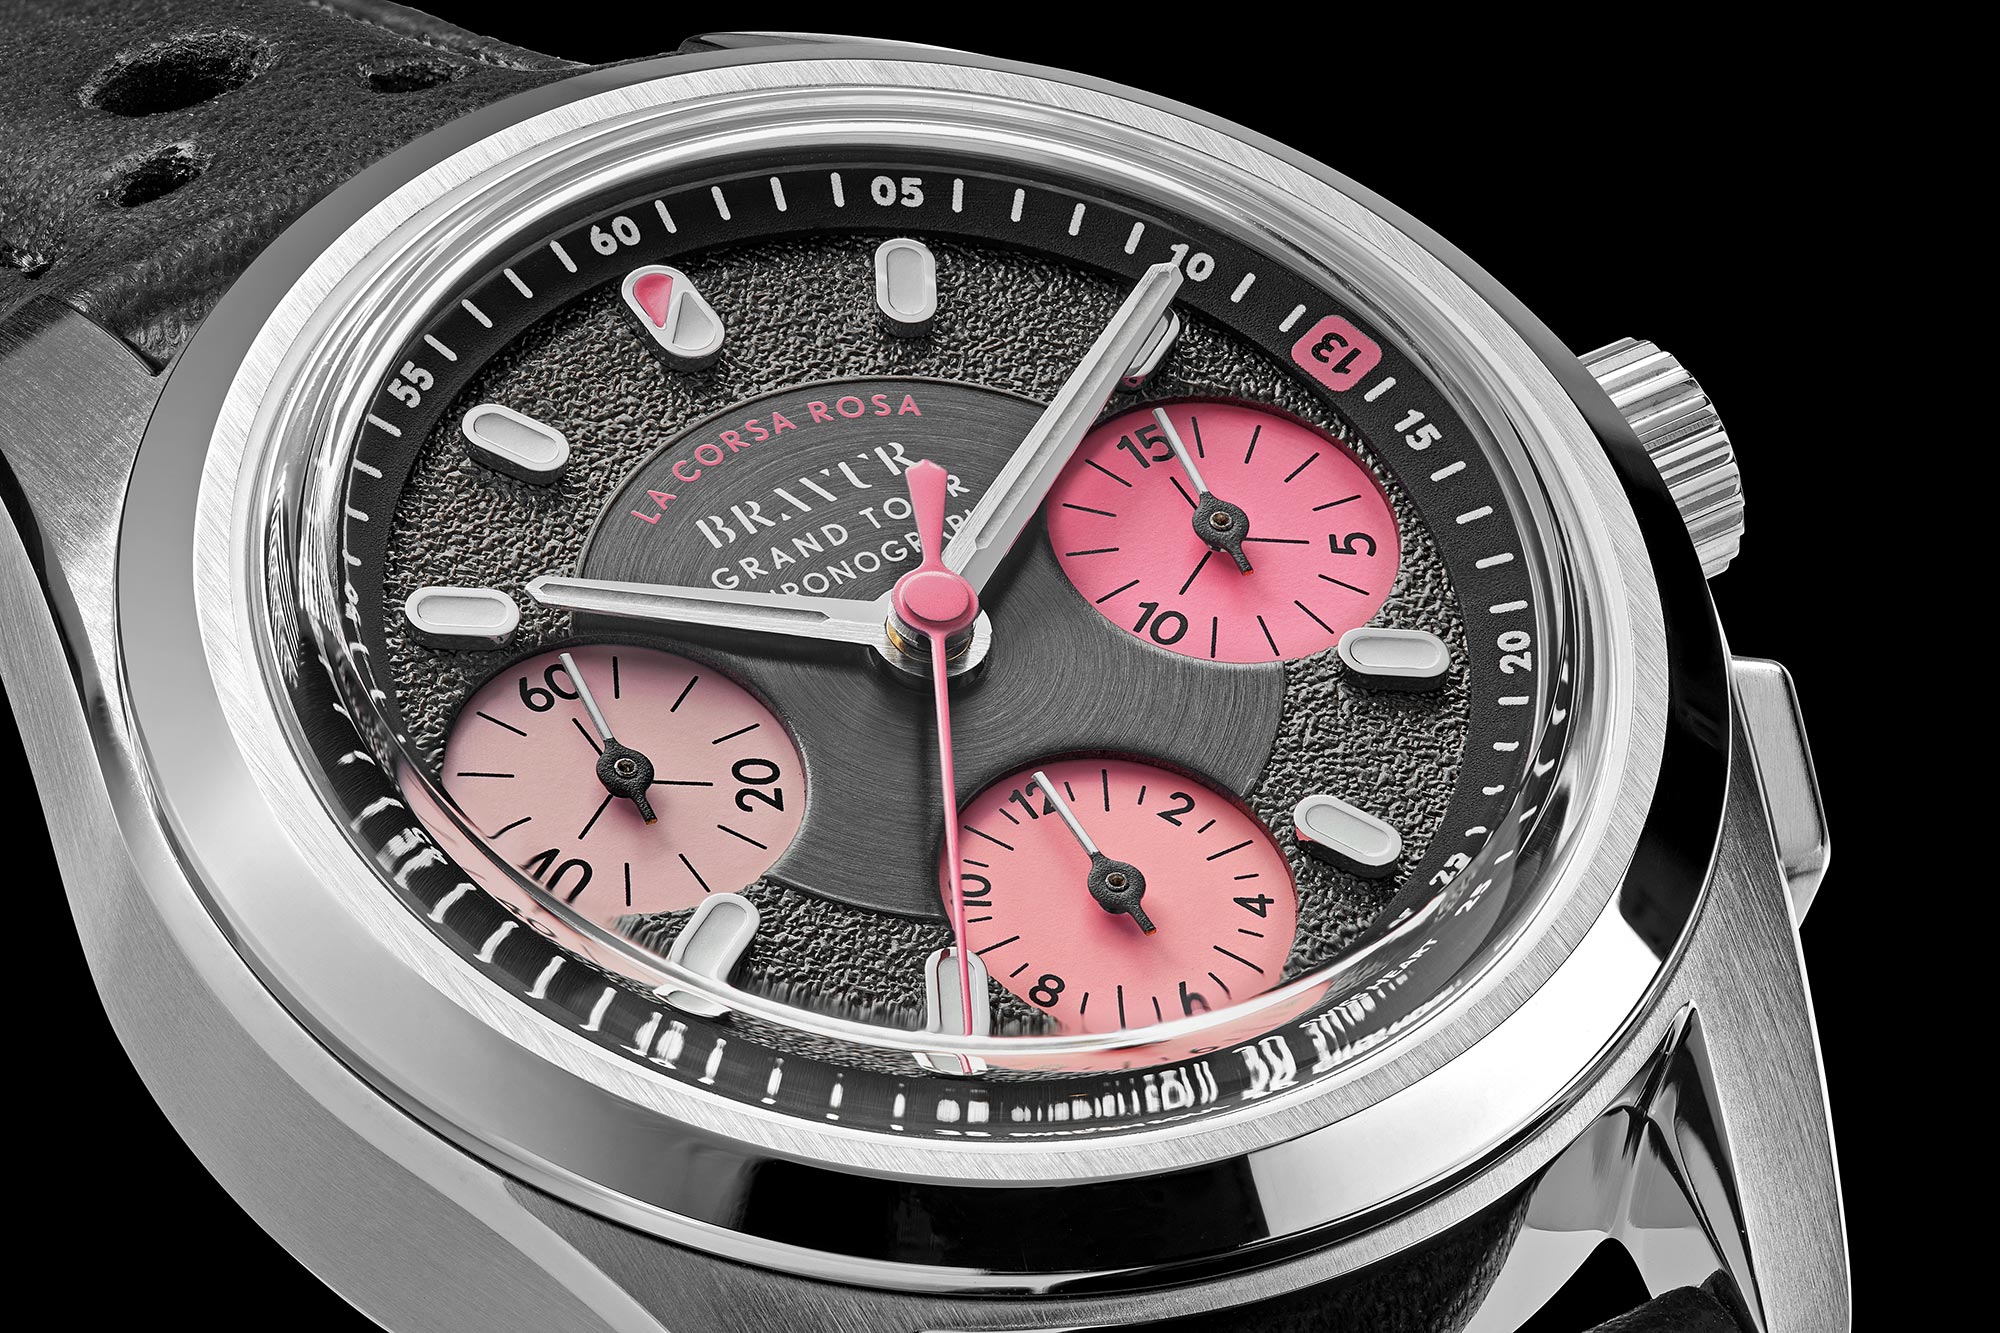 Bravur La Corsa Rosa IV… Do You Want a $2500 Grand Tour-Inspired Swedish Watch?